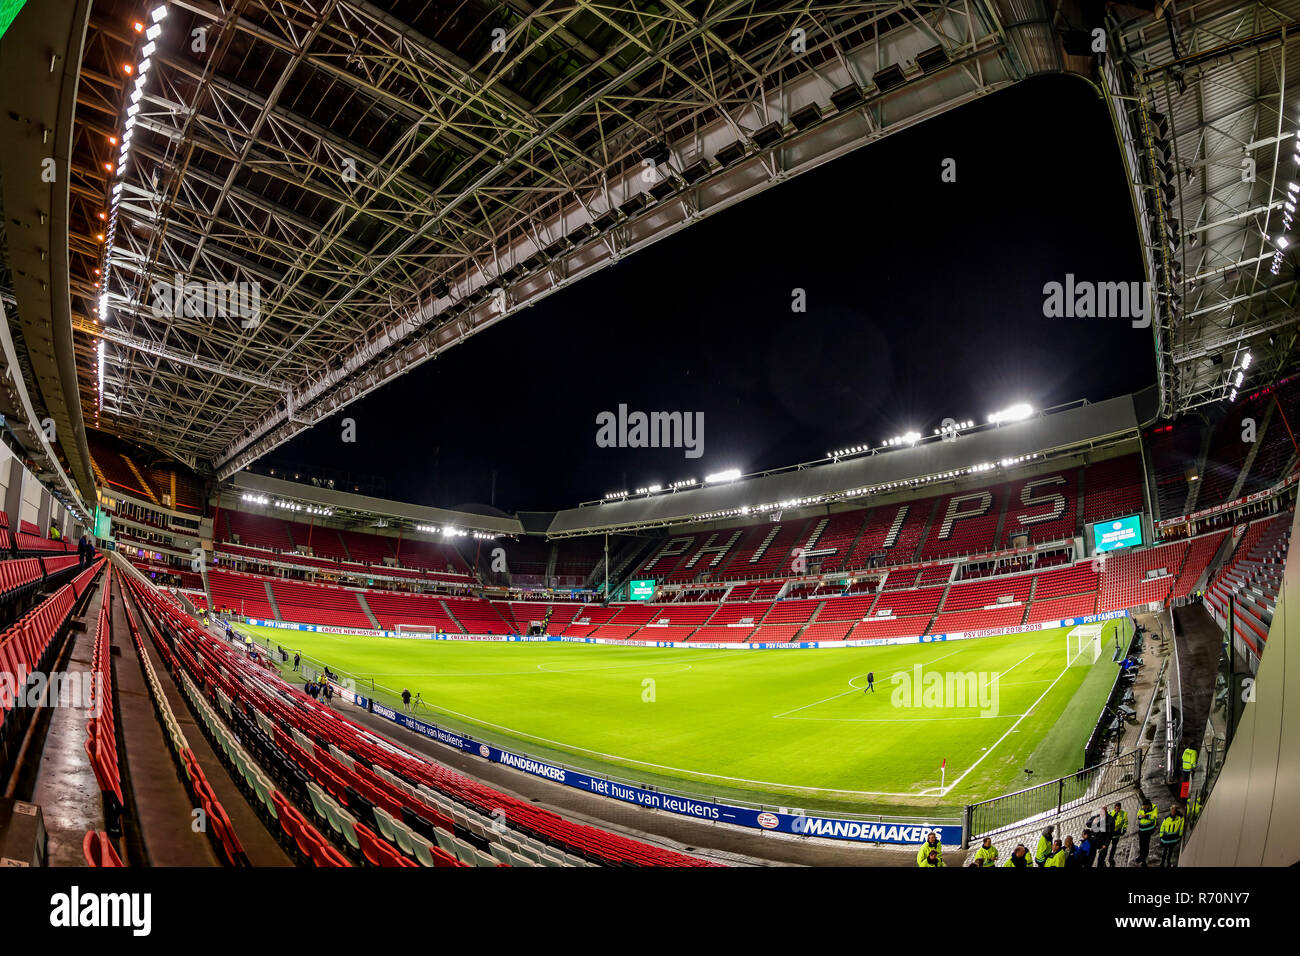 EINDHOVEN, Netherlands, 07-12-2018, football, Philips stadium, Dutch eredivisie, season 2018/2019, stadium overview, before the match PSV - Excelsior, Stock Photo